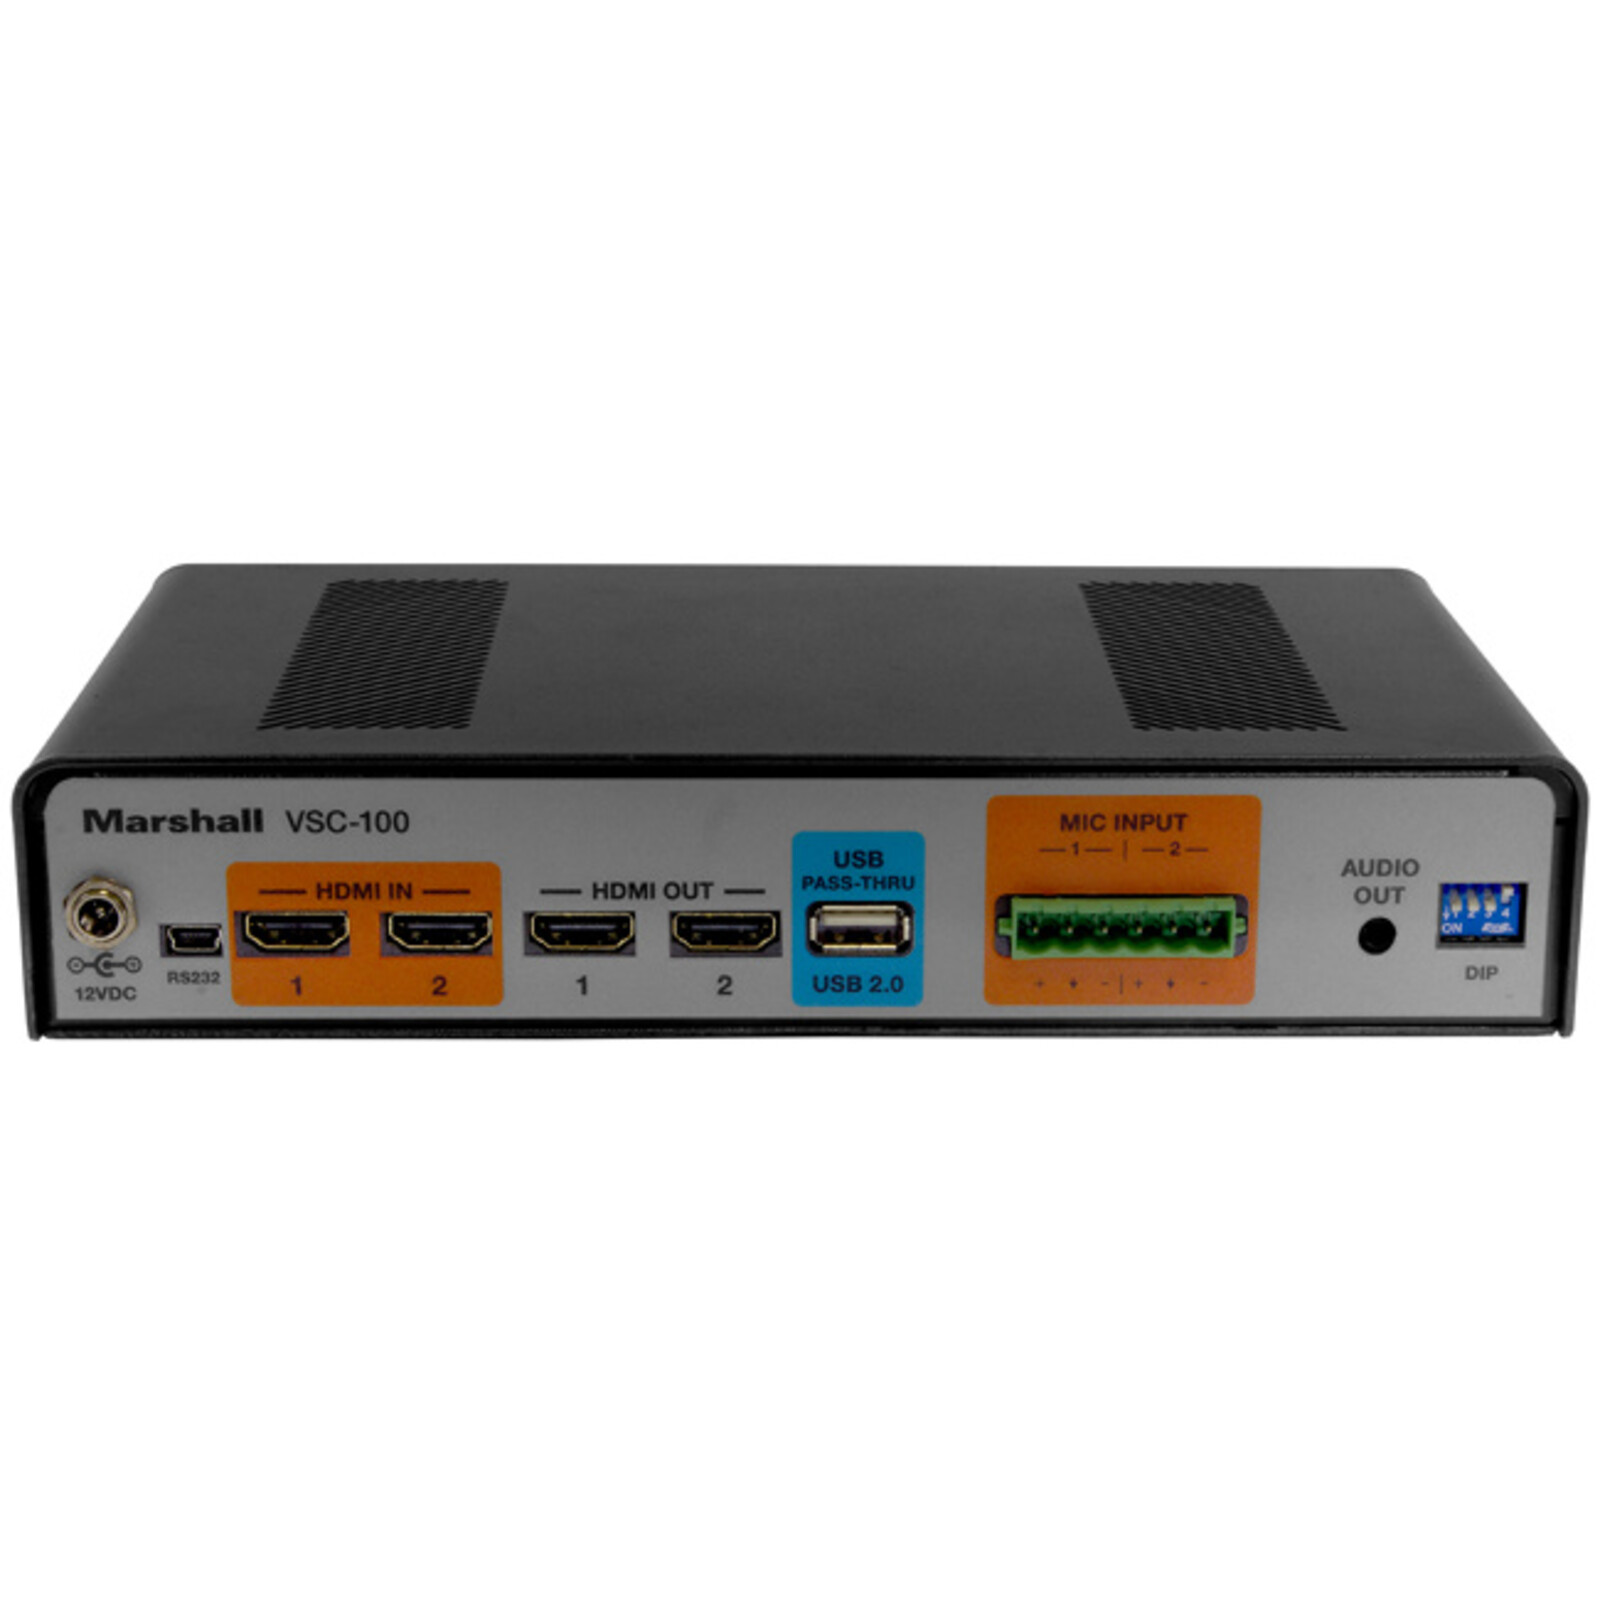 Marshall AV Consolidator Bridge with Dual-HDMI Input to USB 3.0 Computer Output